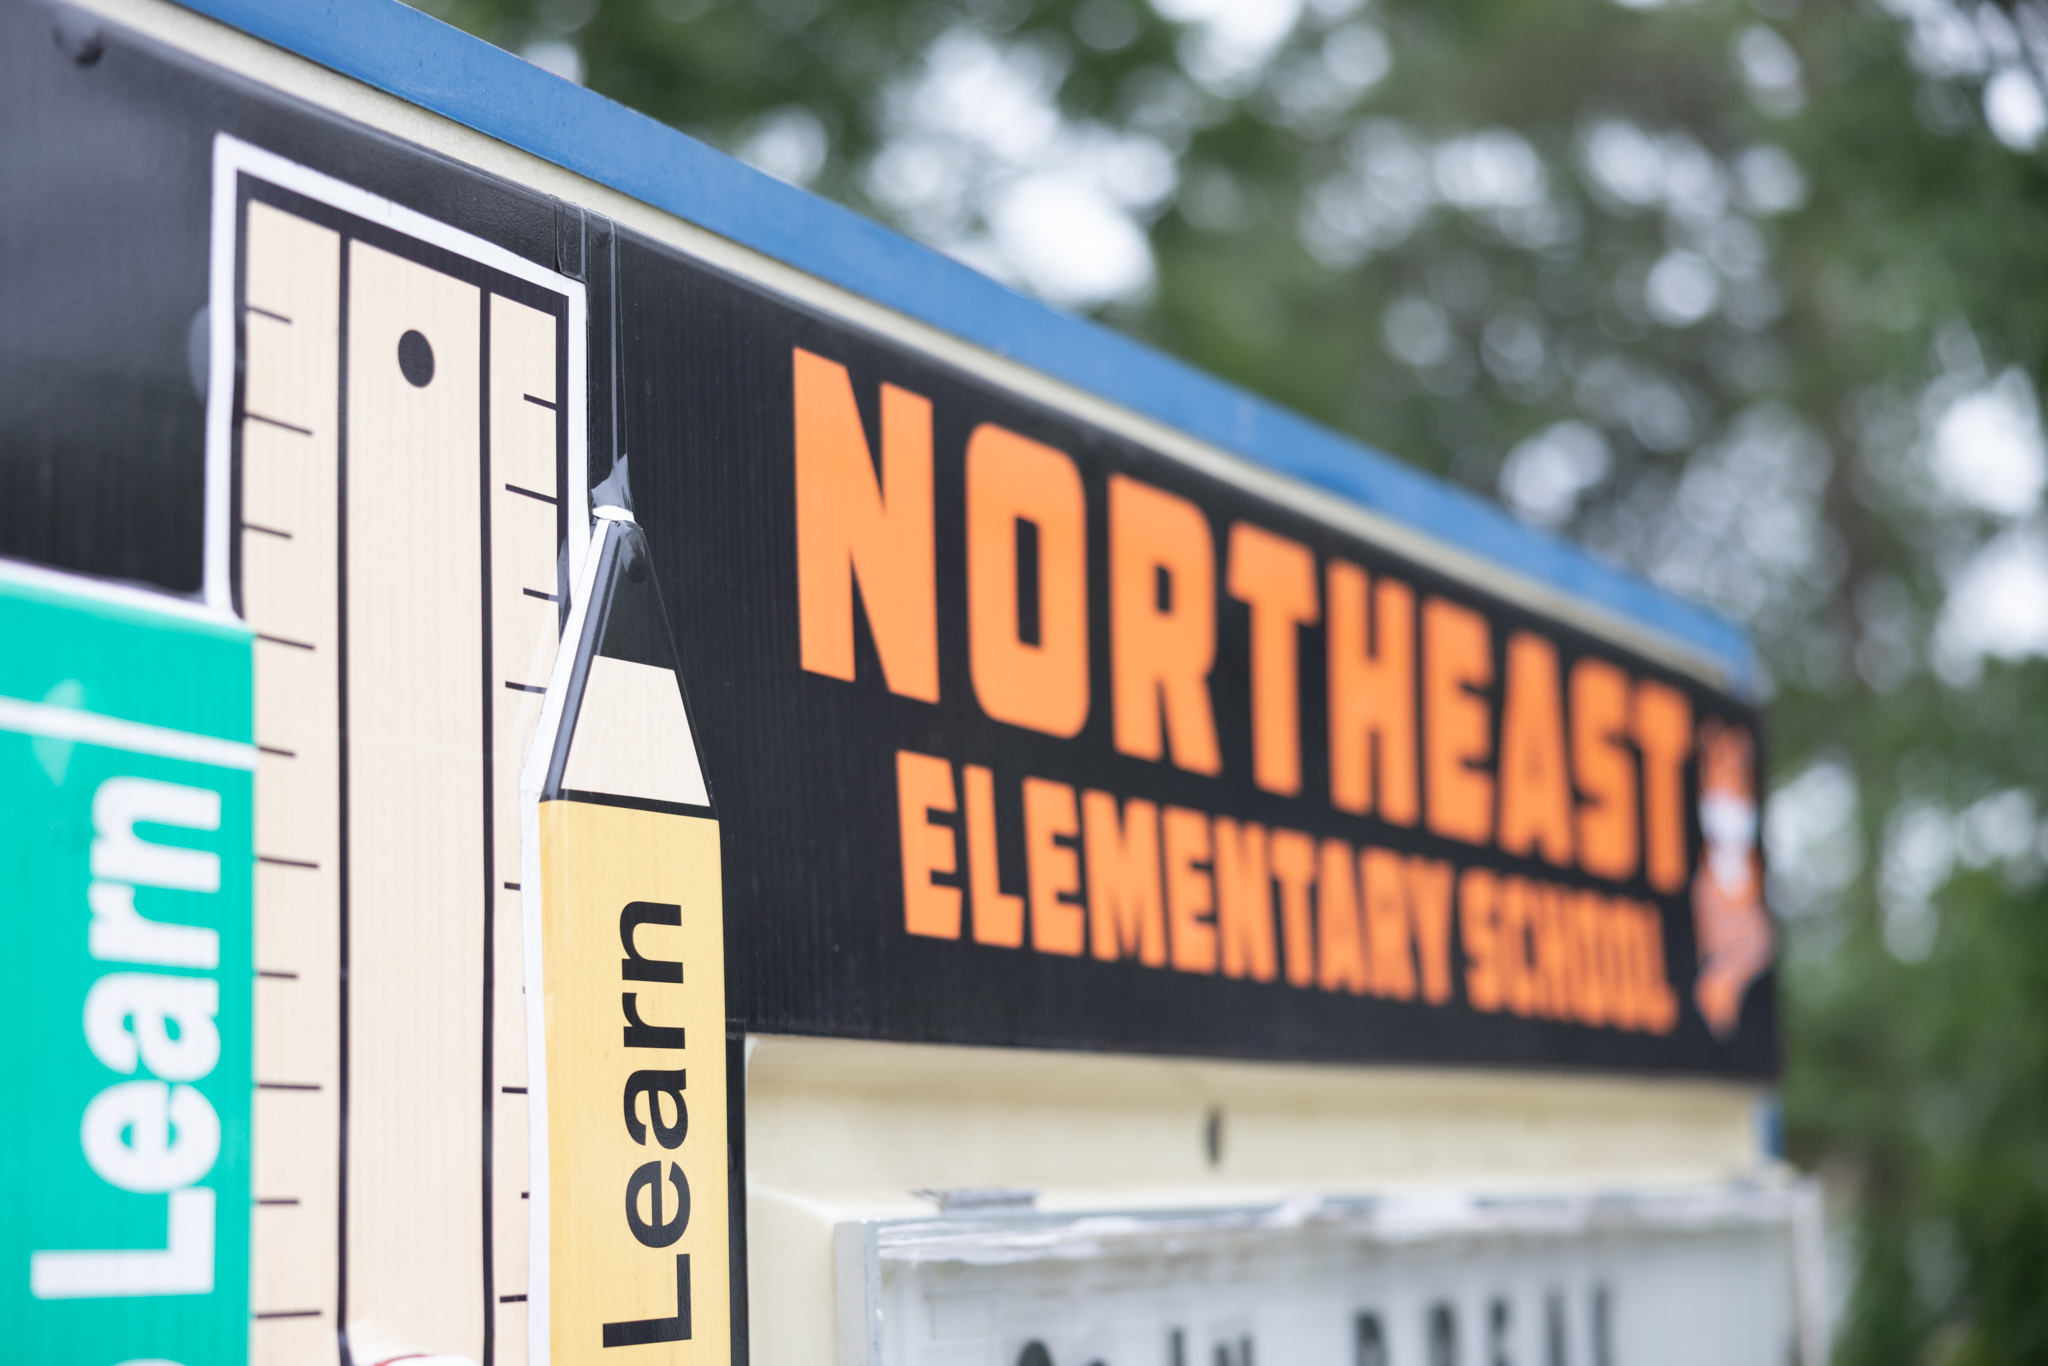 northeast elementary sign